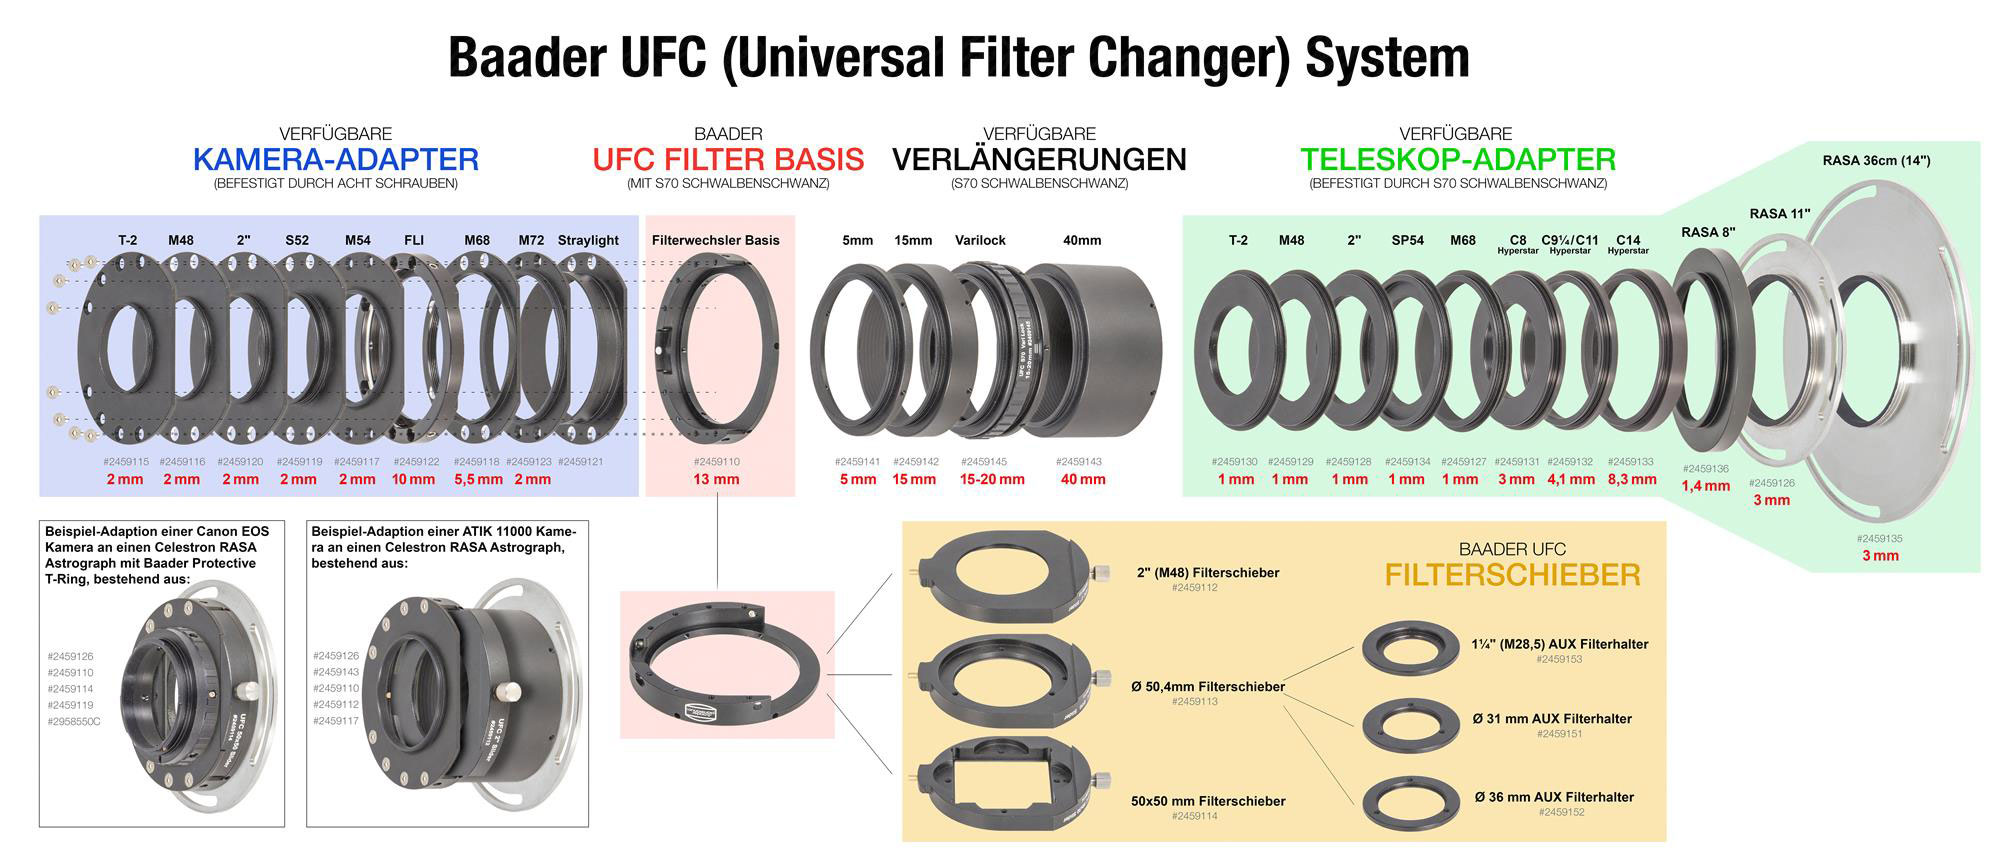 Operating Mode: Baader Universal Filter Changer